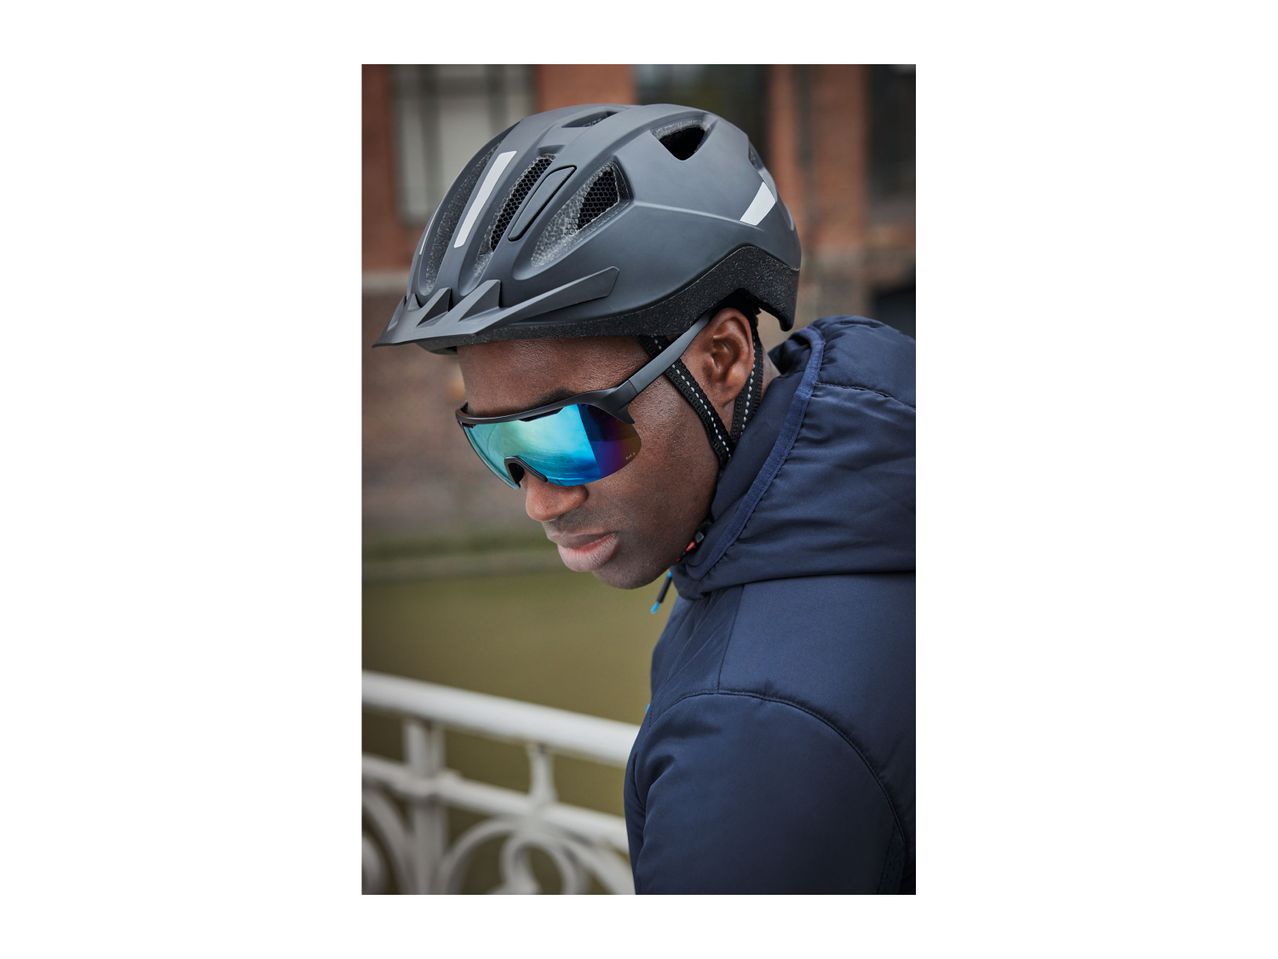 Go to full screen view: Crivit Bike Helmet with Rear Light - Image 6